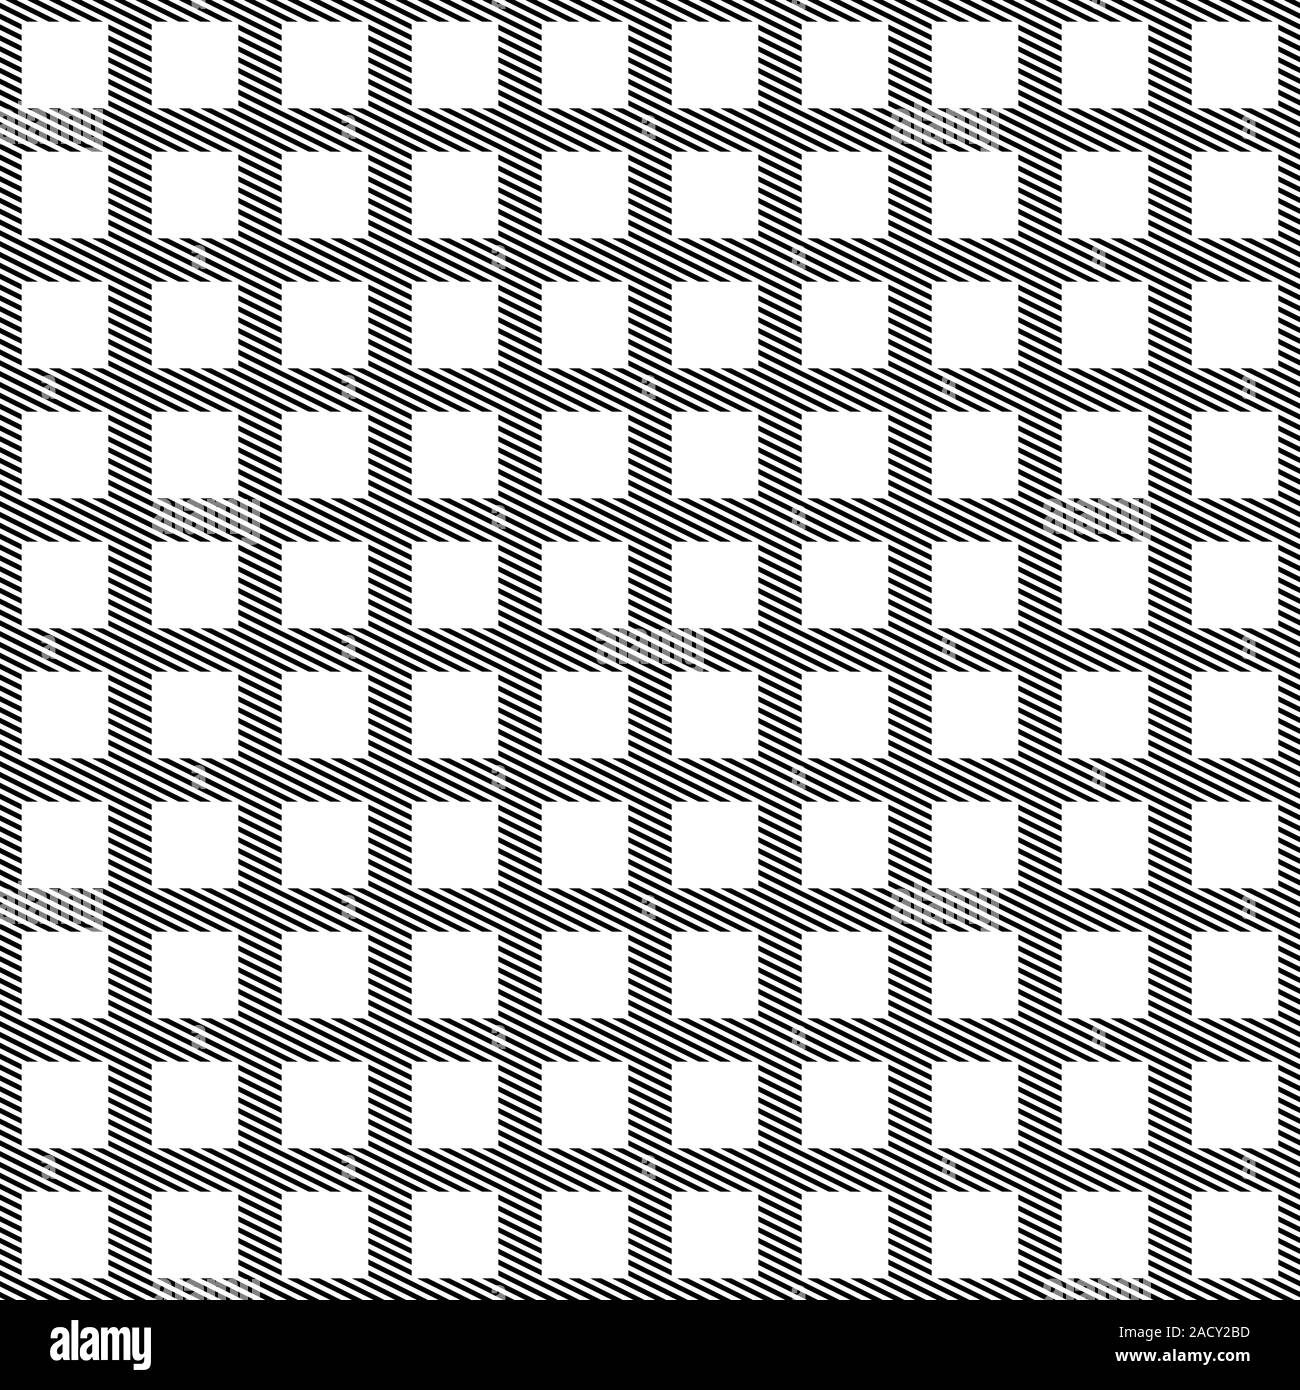 Tartan pattern Black and White Stock Photos & Images - Alamy